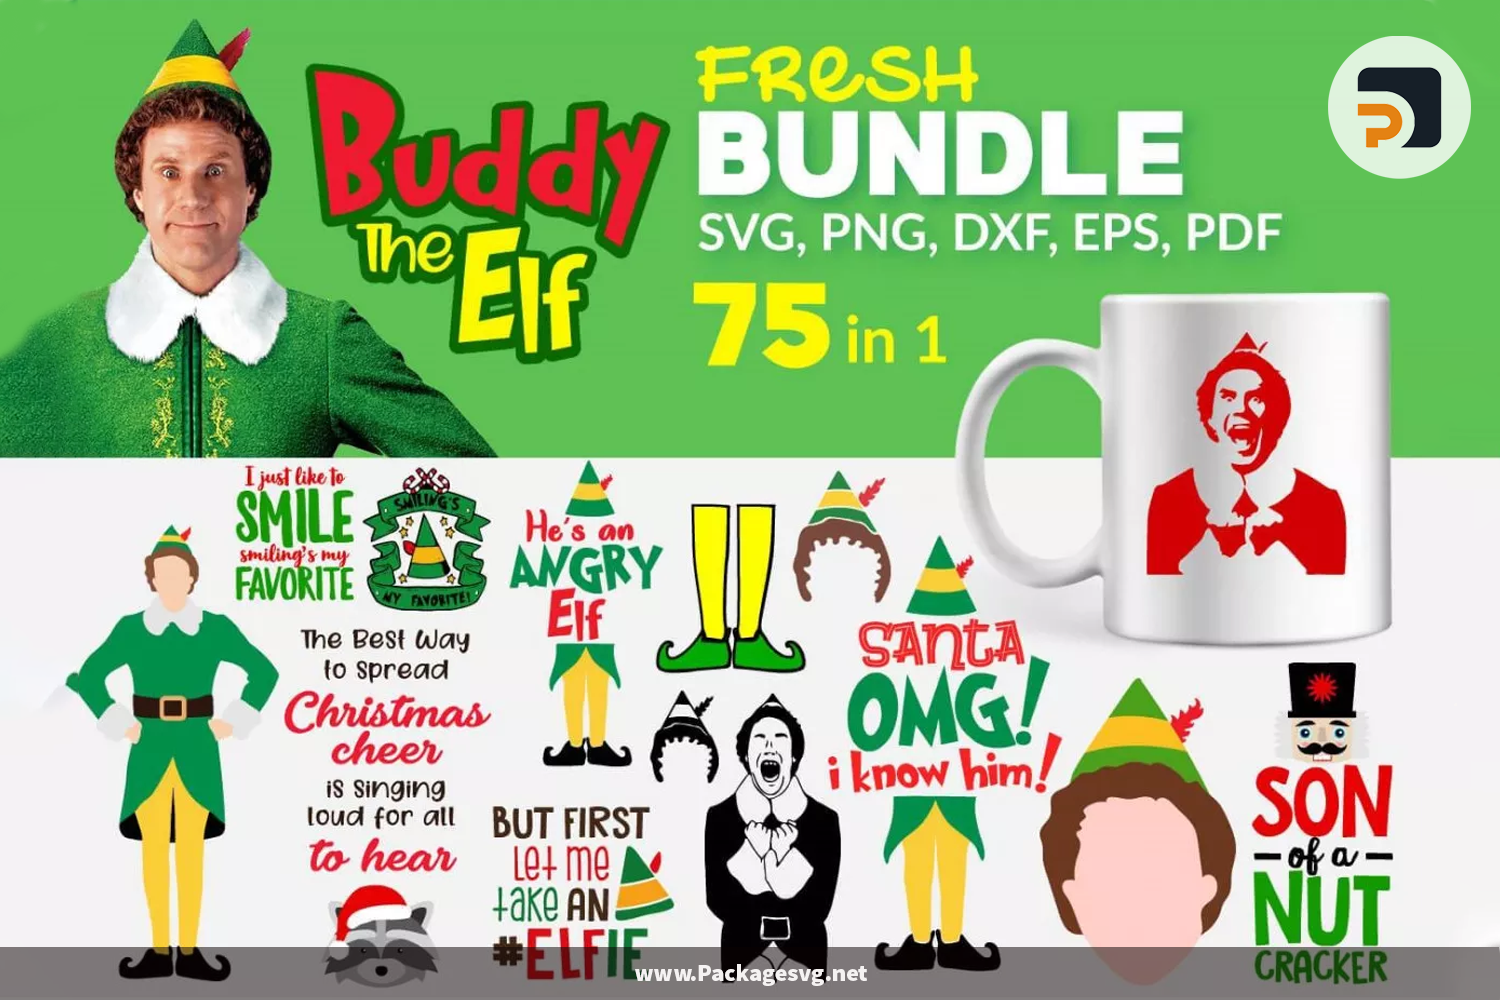 Buddy The Elf Christmas SVG Bundle